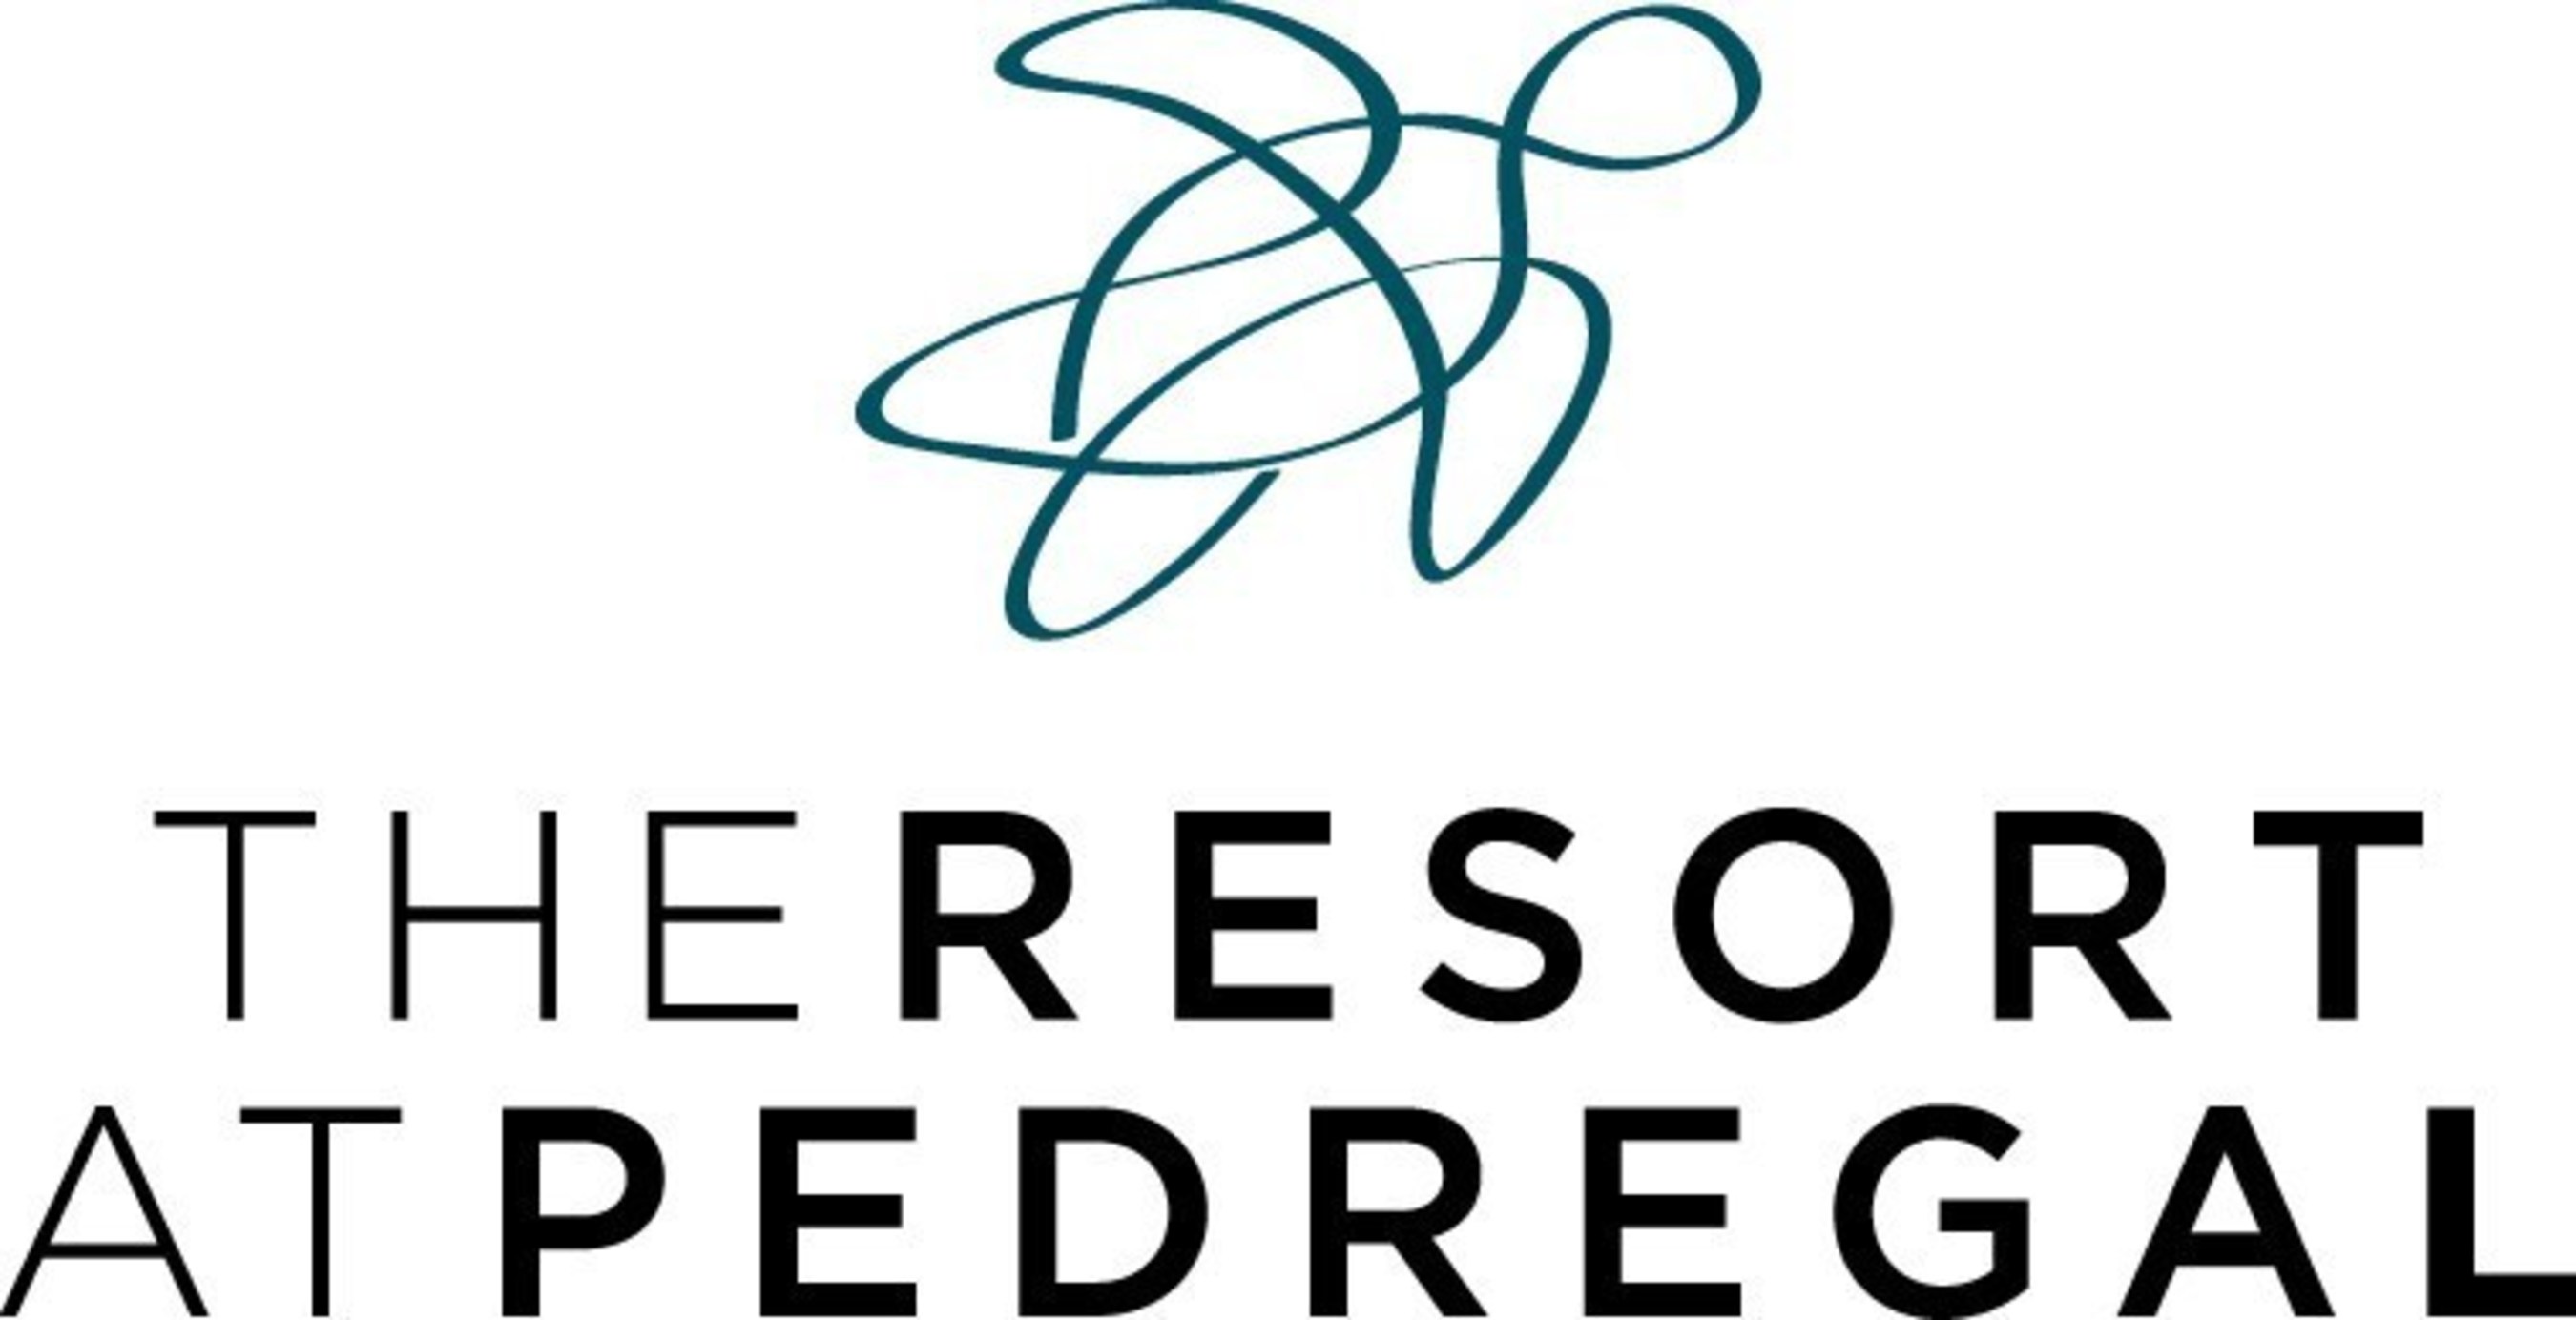 Pedregal Logo photo - 1